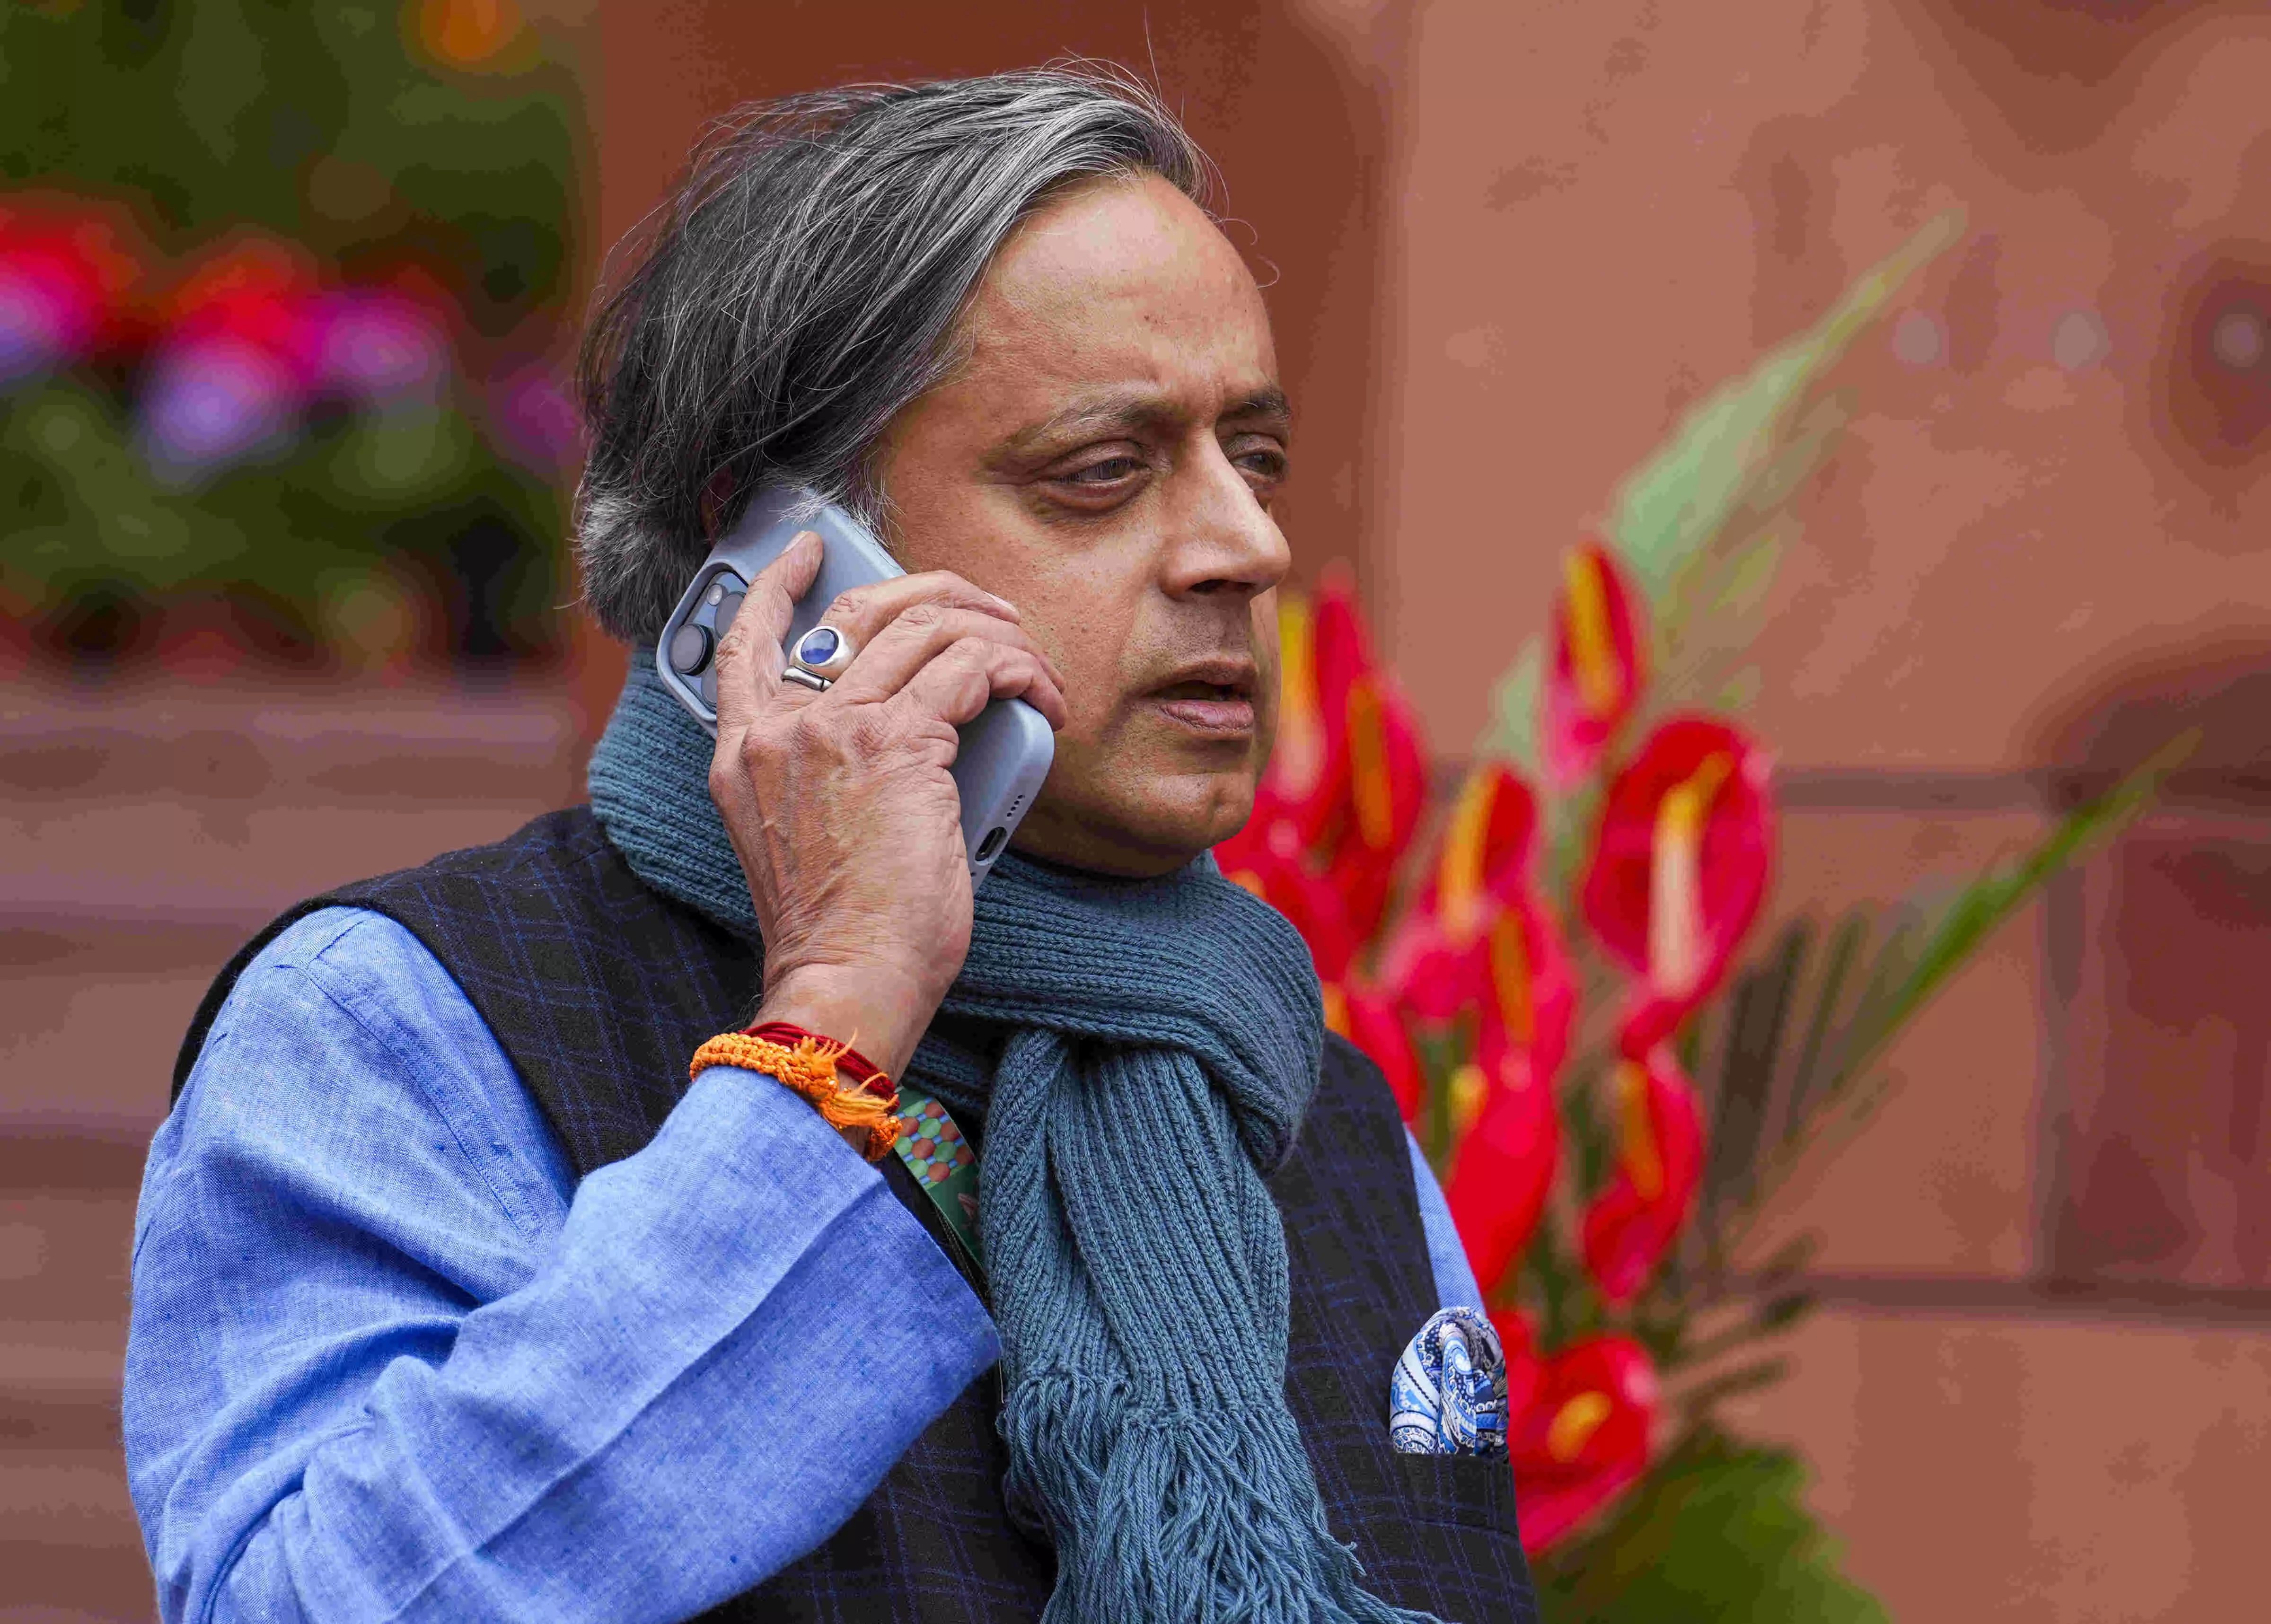 India needs alternative leadership that understands peoples needs: Shashi Tharoor